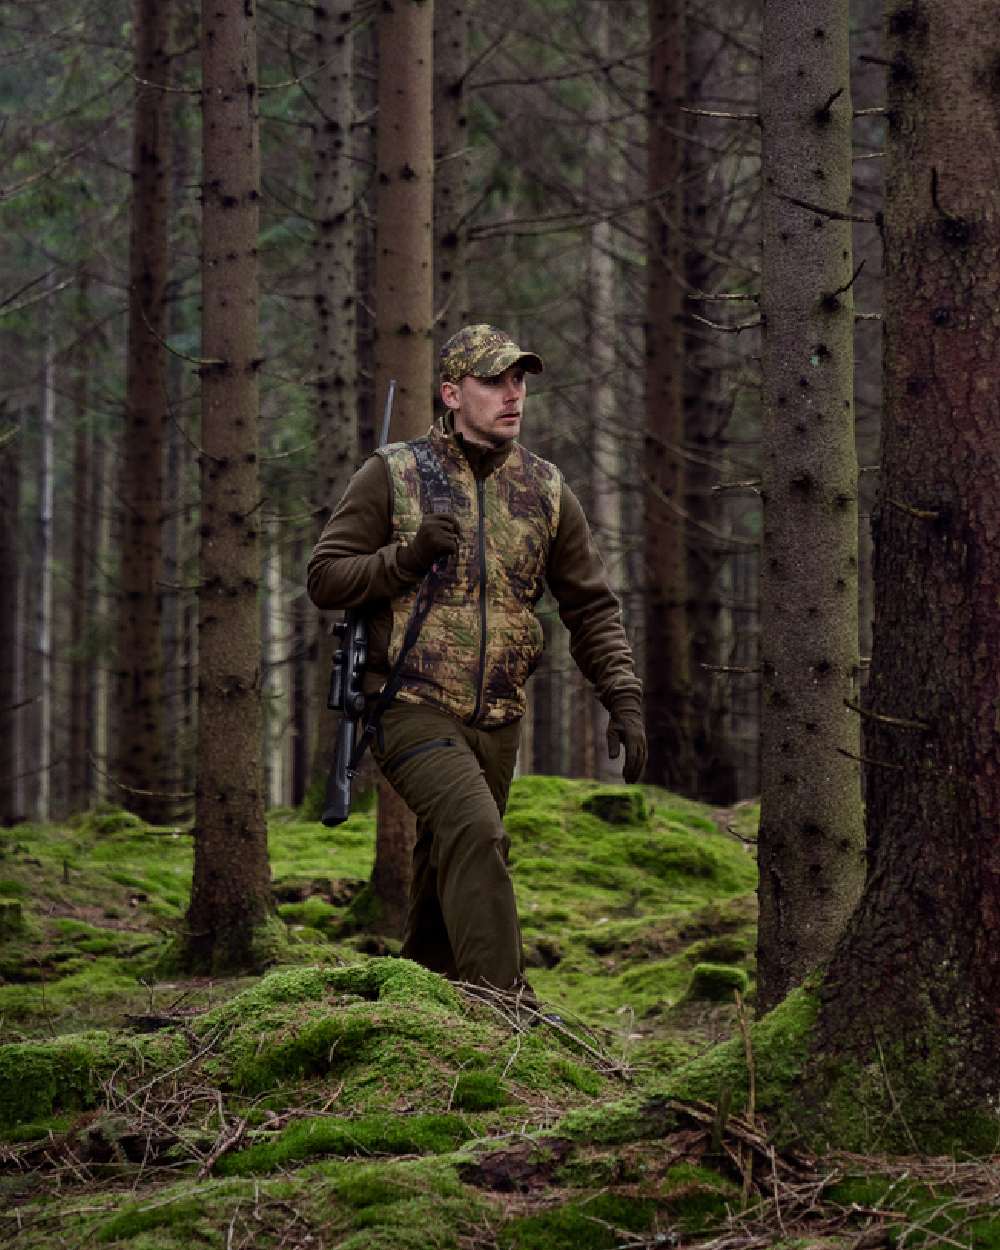 AXIS Forest coloured Harkila Deer Stalker Camo Reversible Packable Waistcoat worn by hunter in woodland